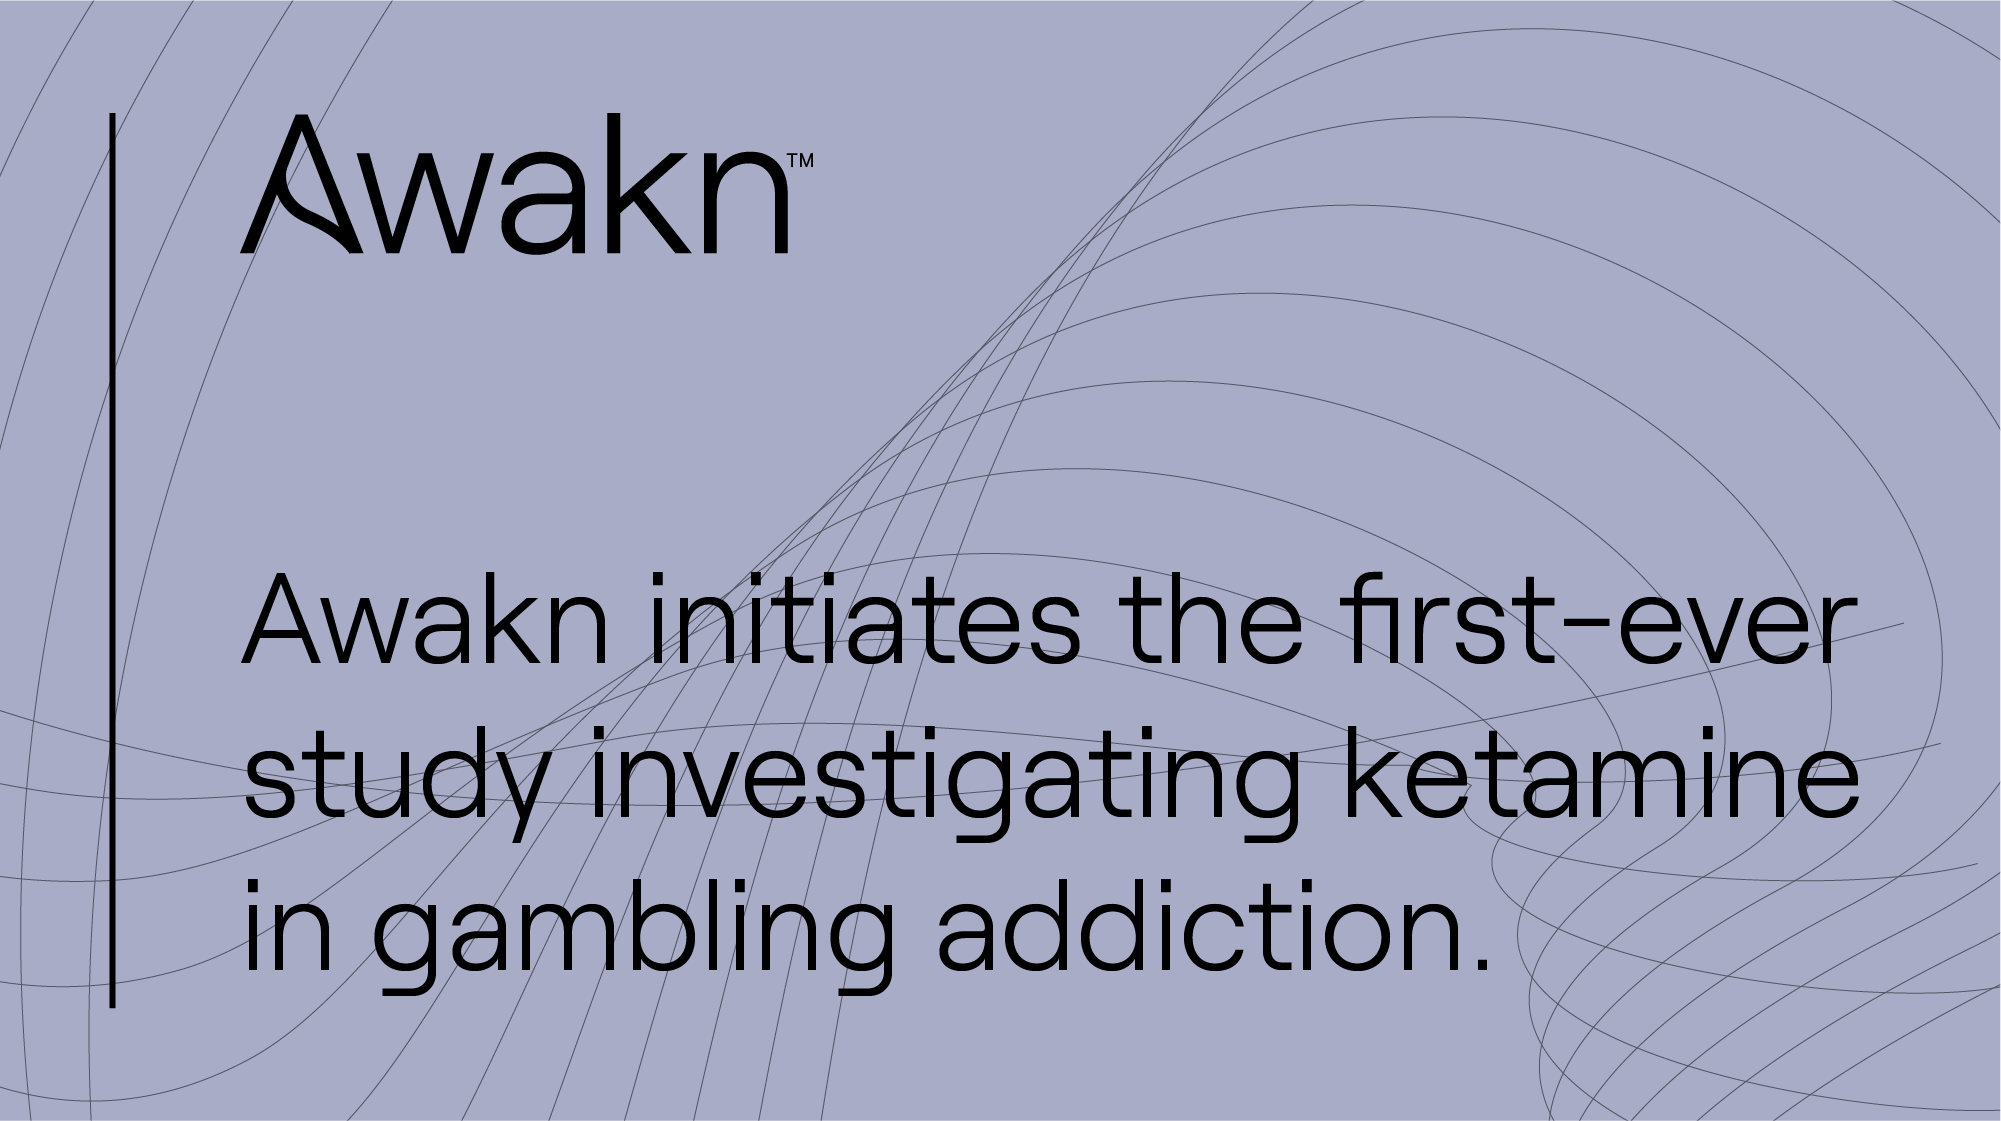 Awakn Life Sciences Initiates the First Ketamine Treatment Study for Gambling Addiction Led by Professor Celia Morgan